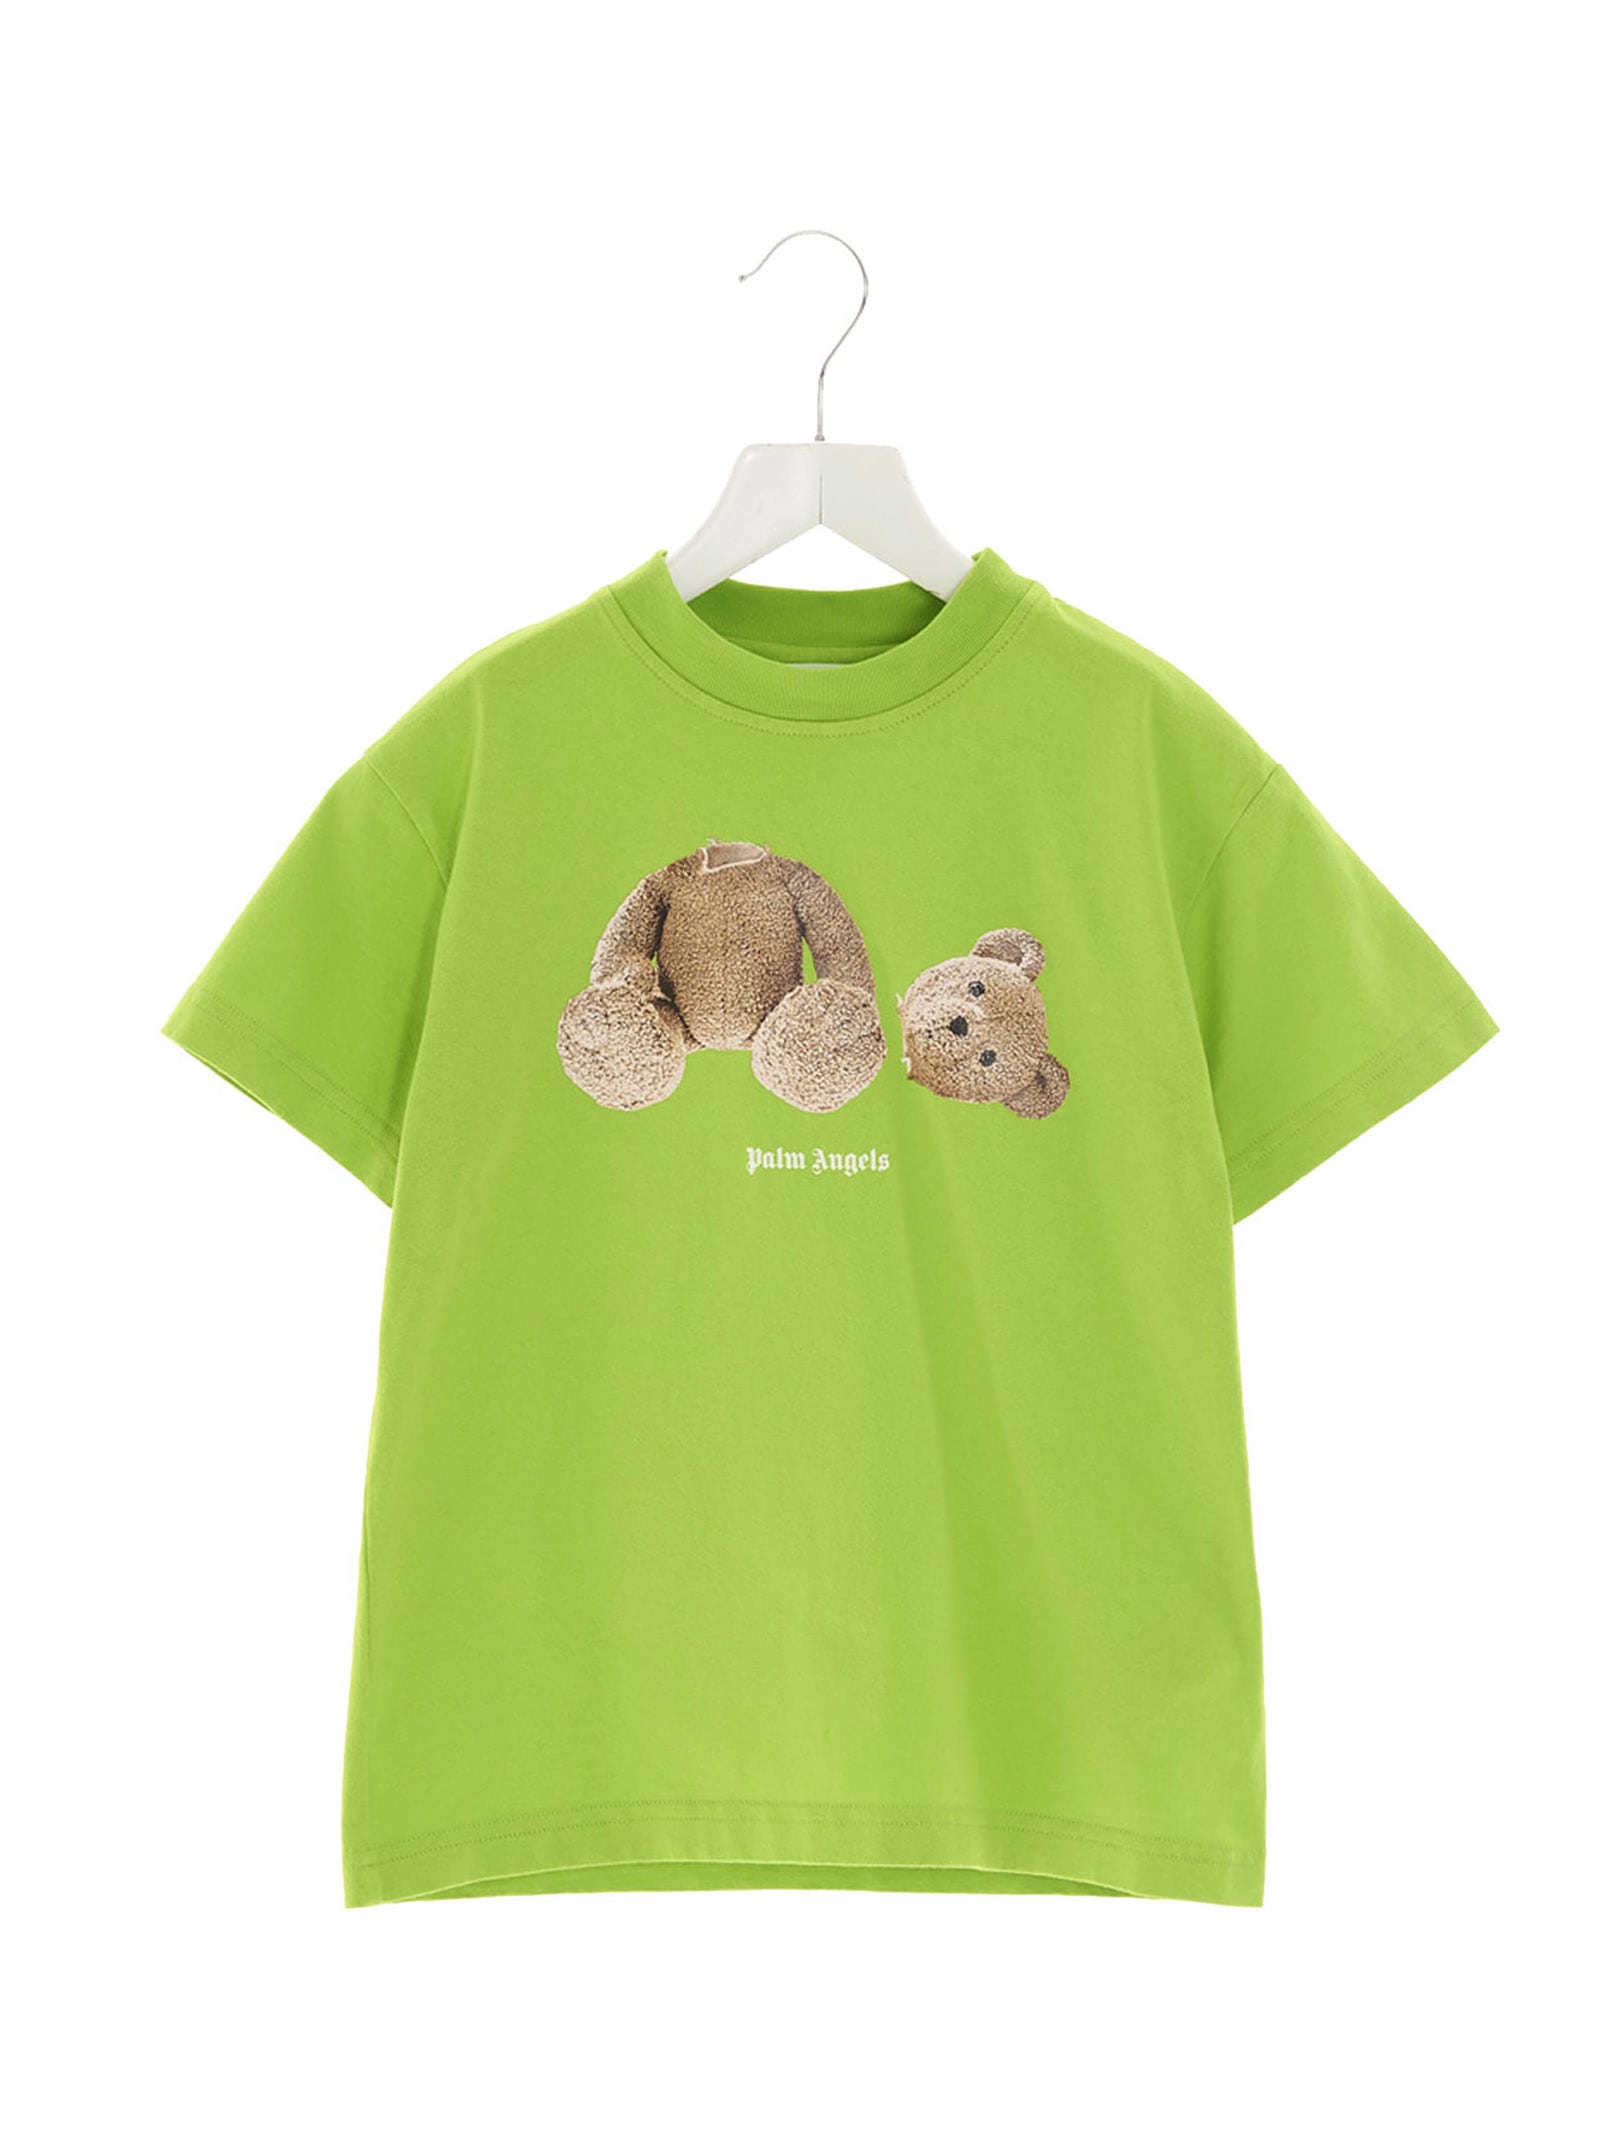 Palm Angels bear T-shirt